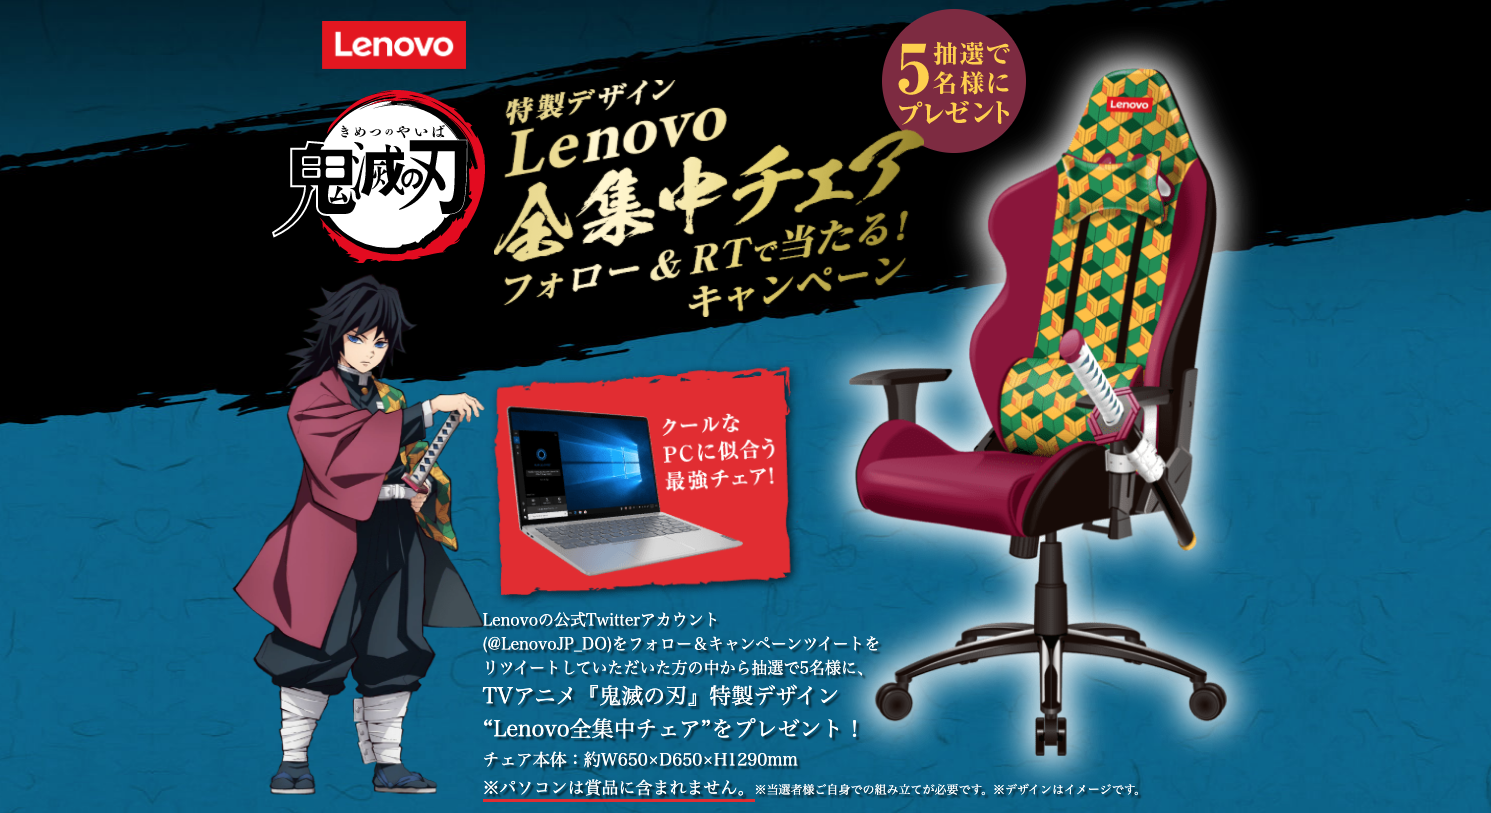 Image: Lenovo